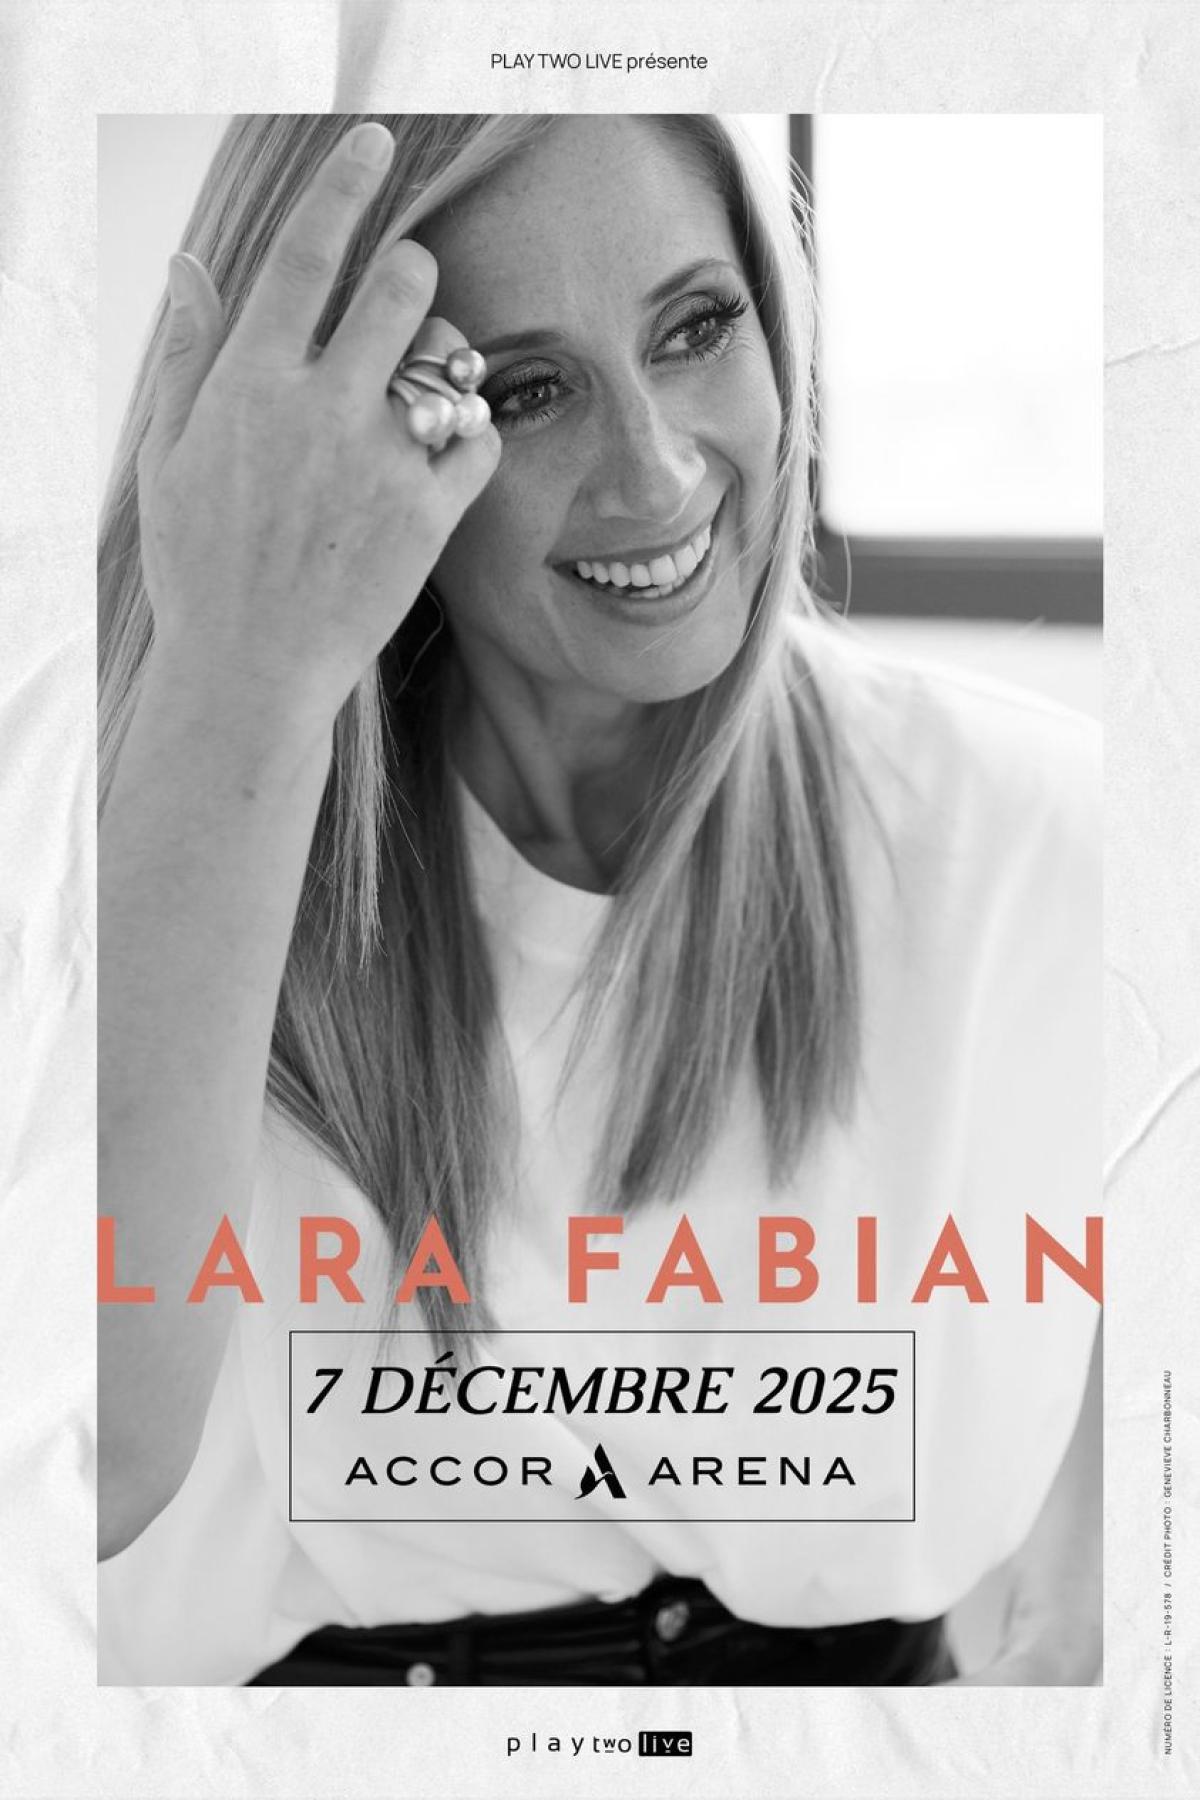 Lara Fabian al Accor Arena Tickets